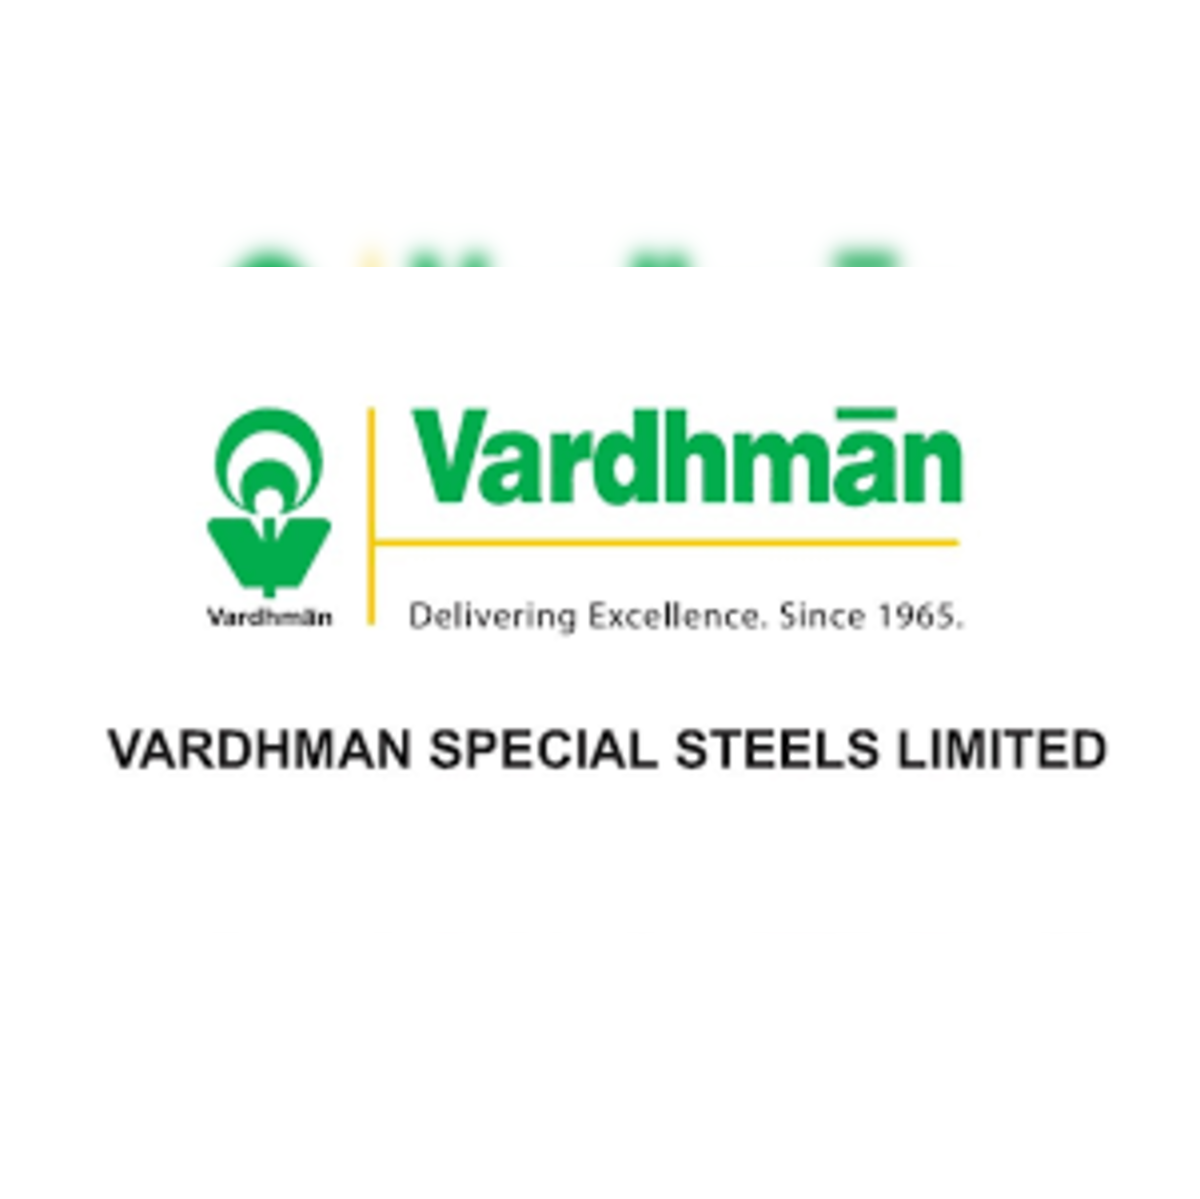 Vardhman – Best Green Product Portfolio Company in India